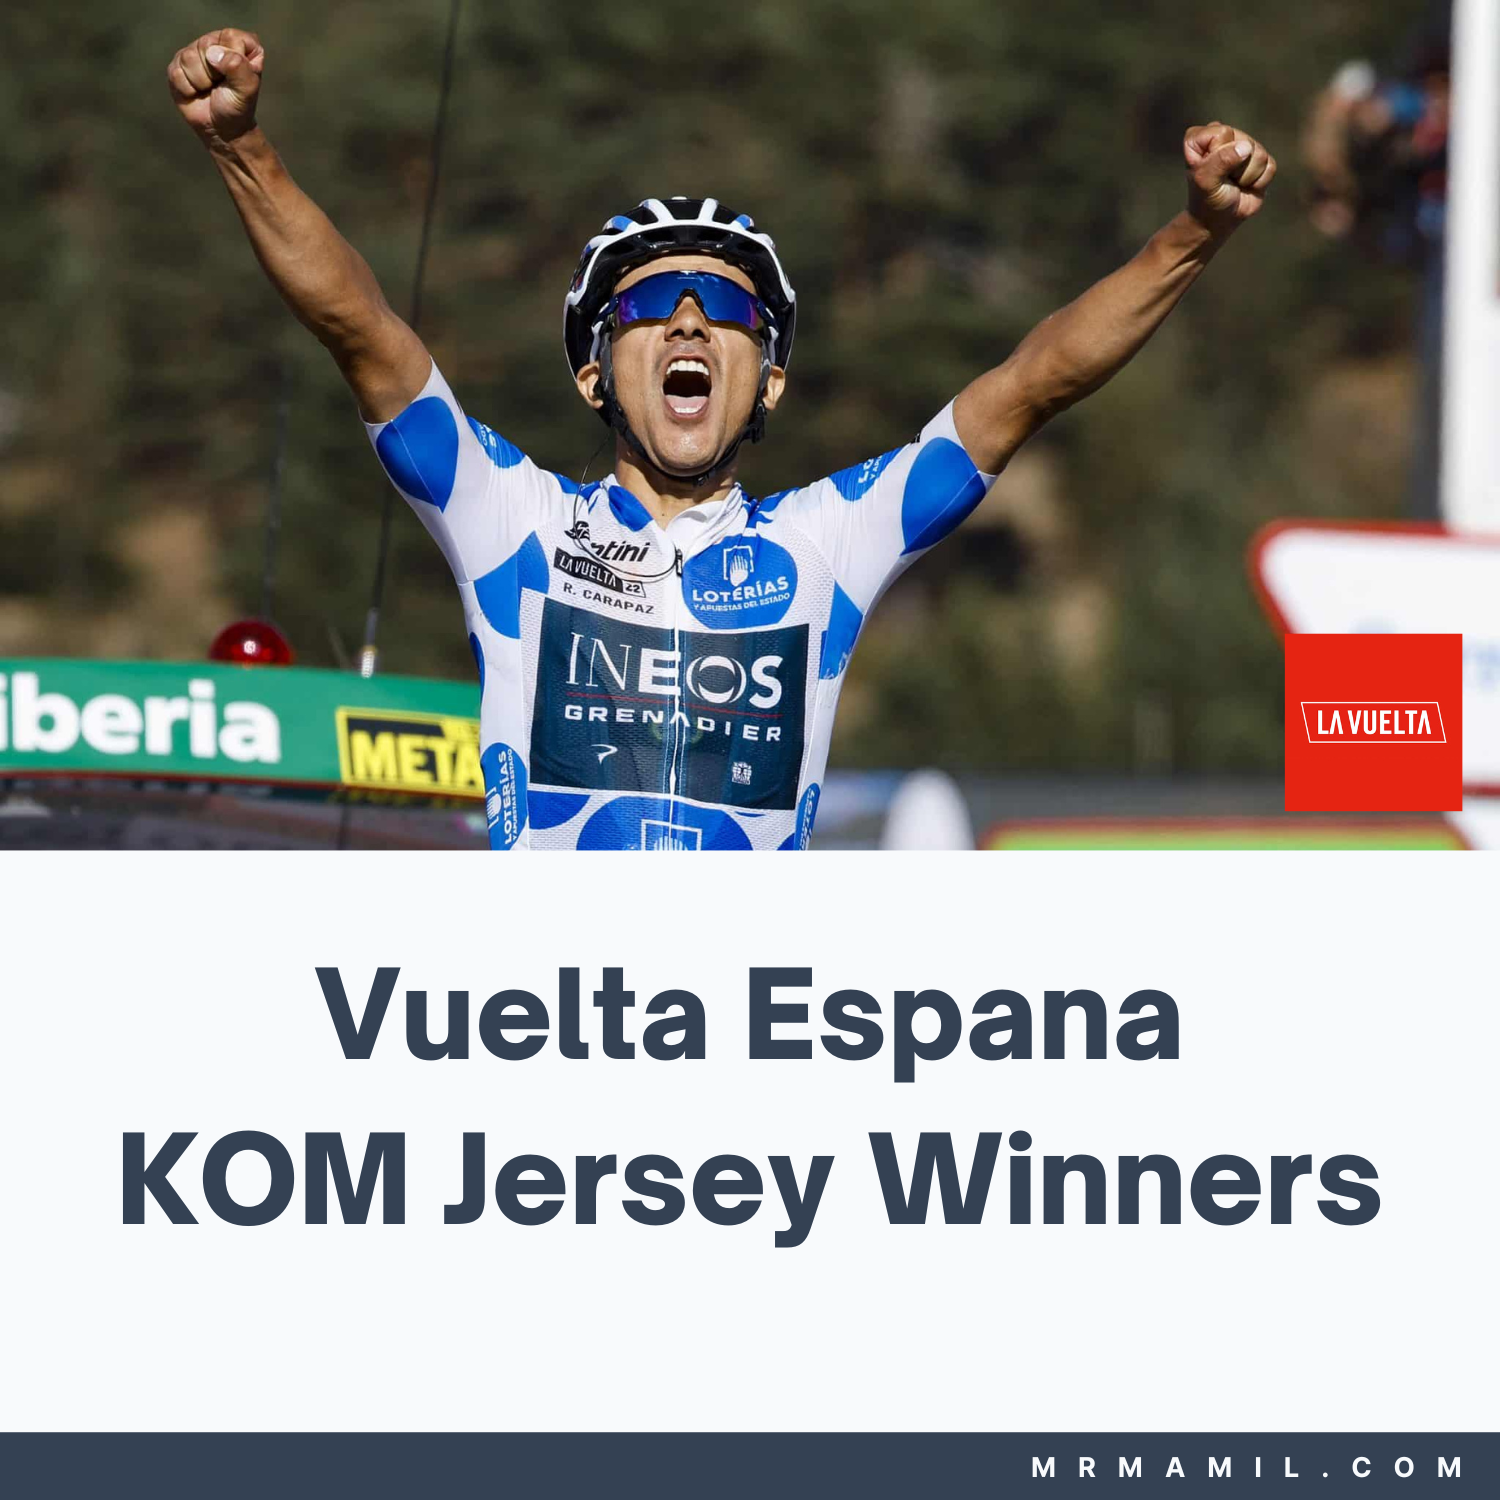 Vuelta Espana King of Mountain Winners